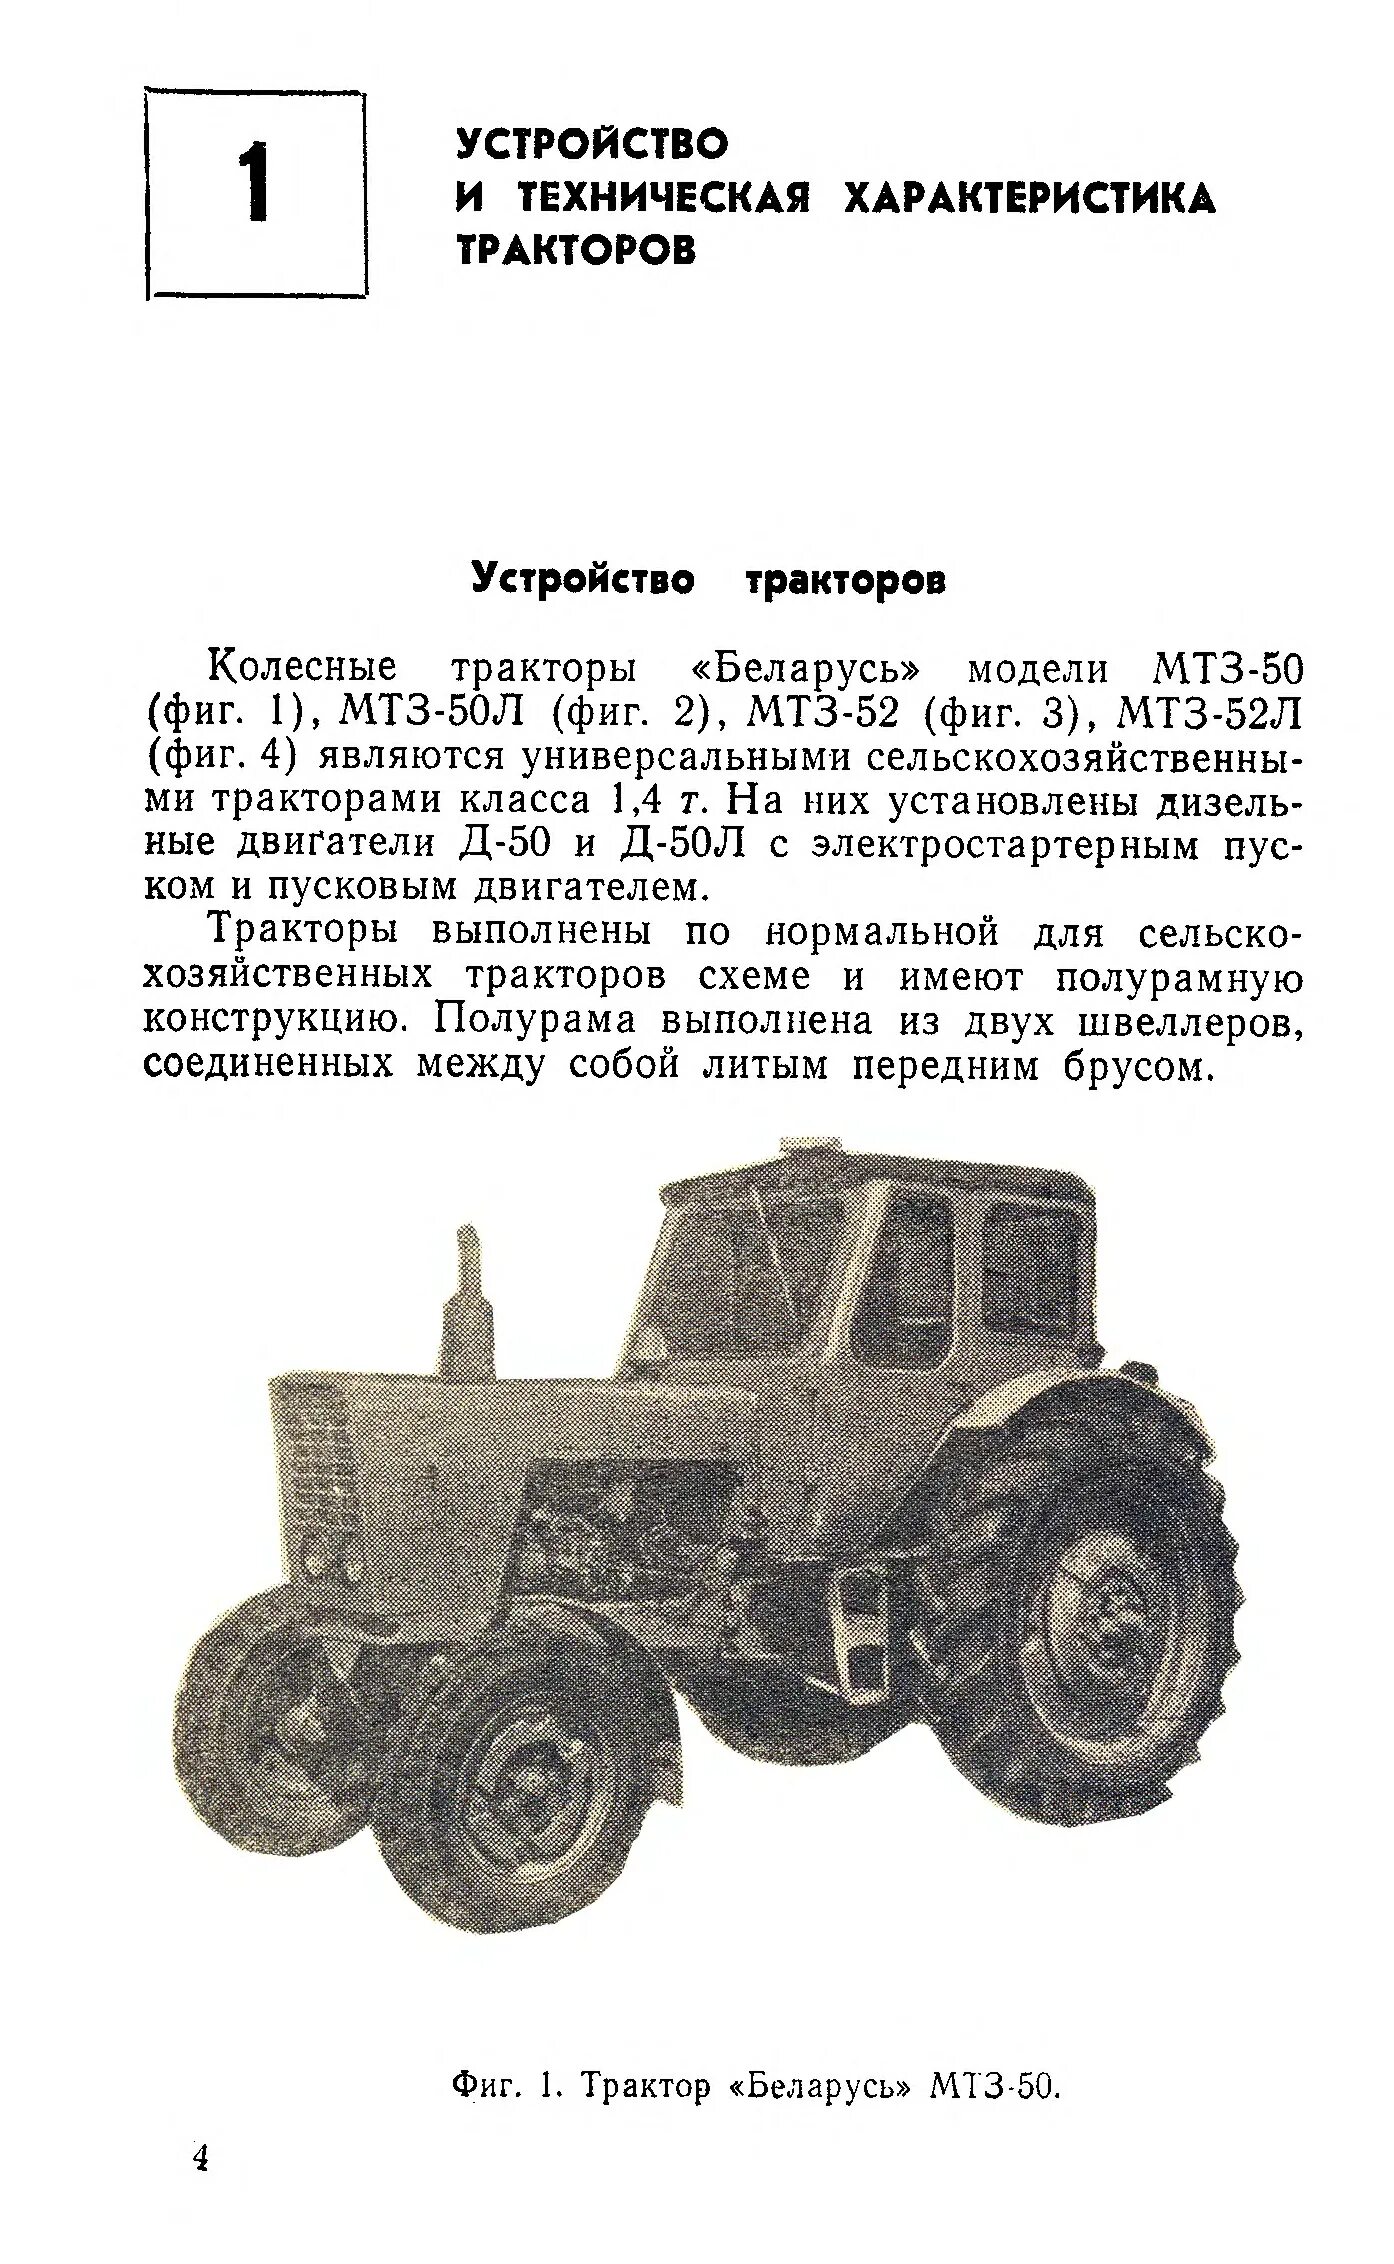 Вес тракторной. Трактор МТЗ 80 Беларус технические характеристики. МТЗ-50 трактор характеристики. Параметры трактора МТЗ 50. Ширина трактора МТЗ 50.